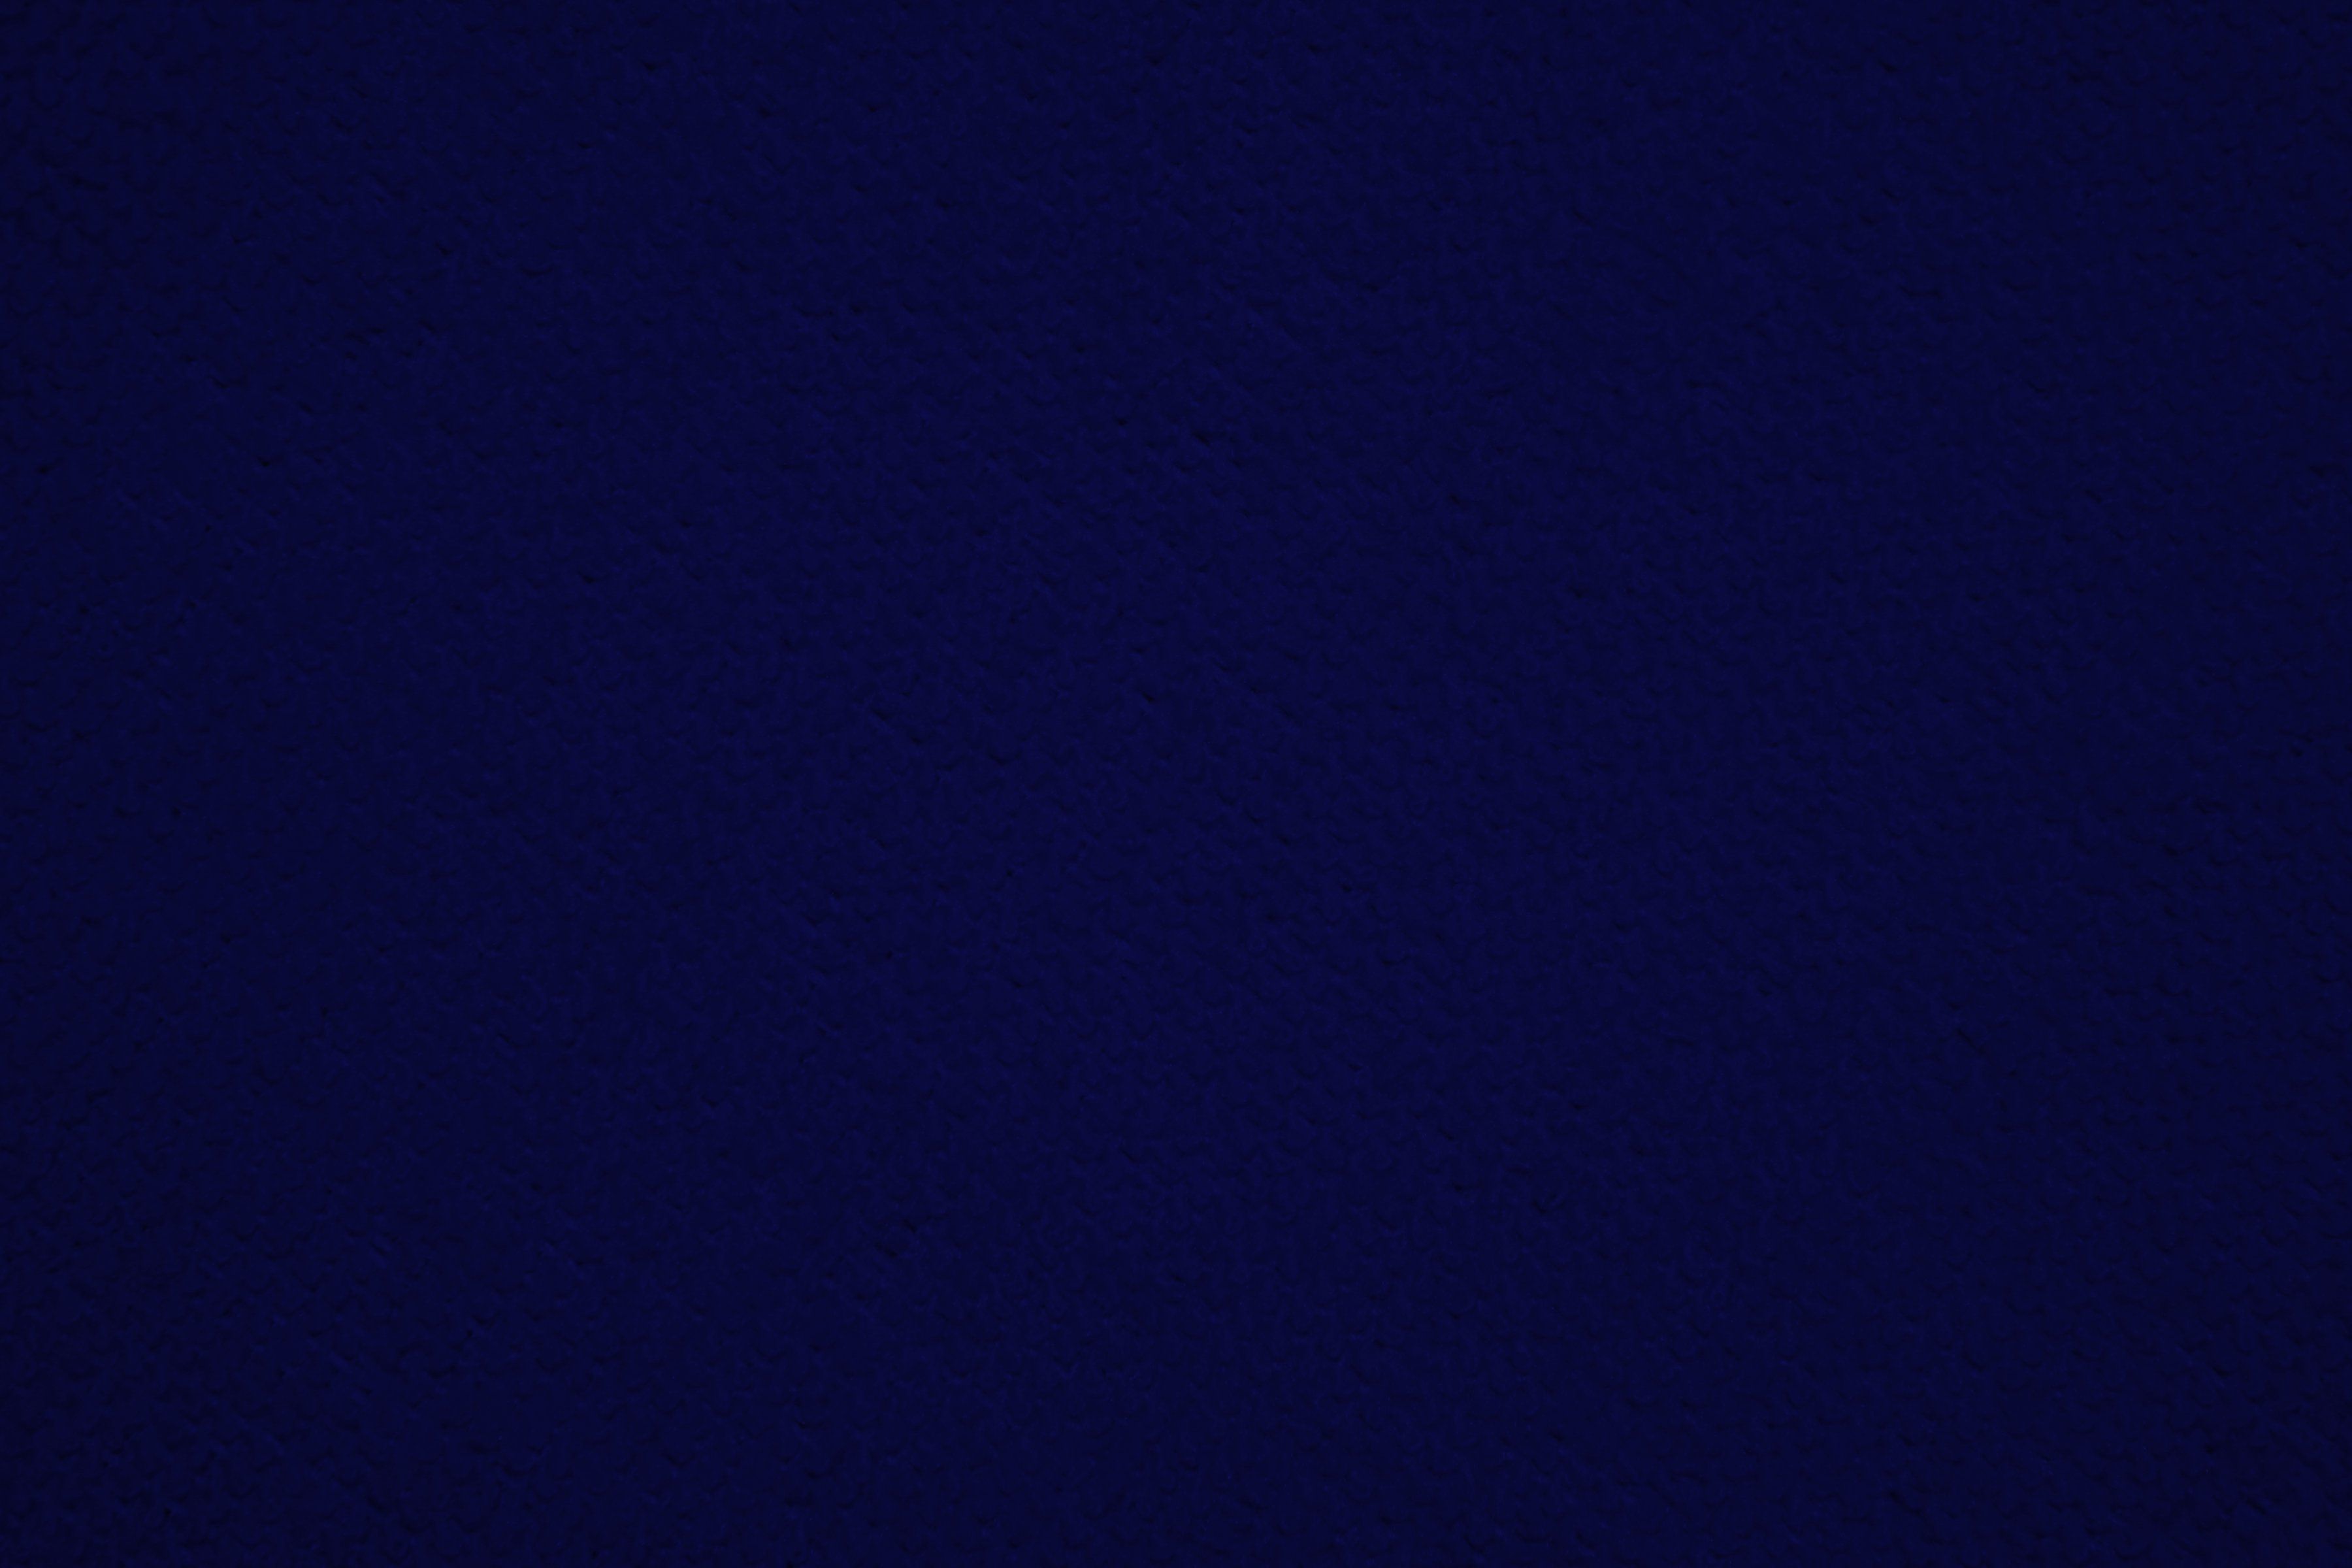 taurus wallpaper,azul,negro,azul cobalto,cielo,púrpura